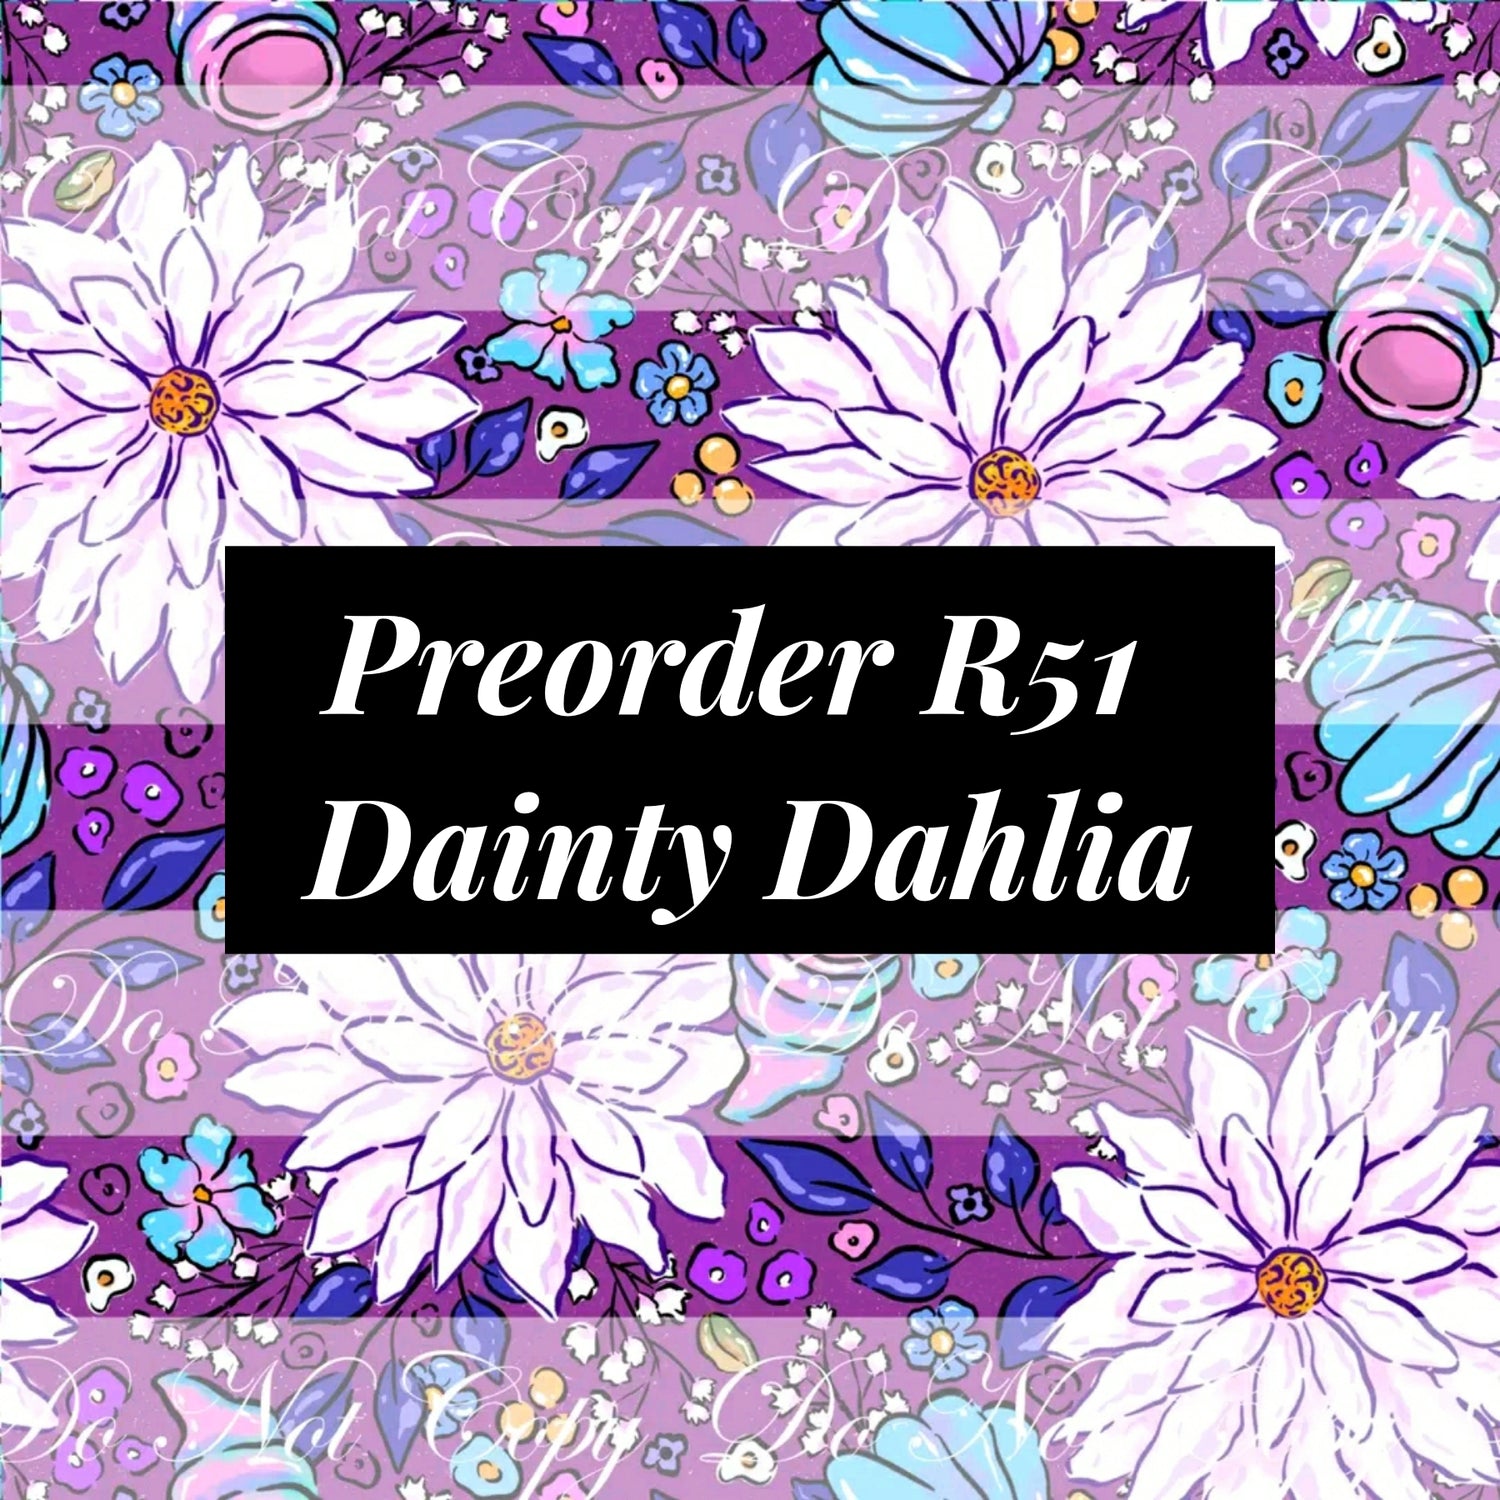 Preorder R51 Dainty Dahlias